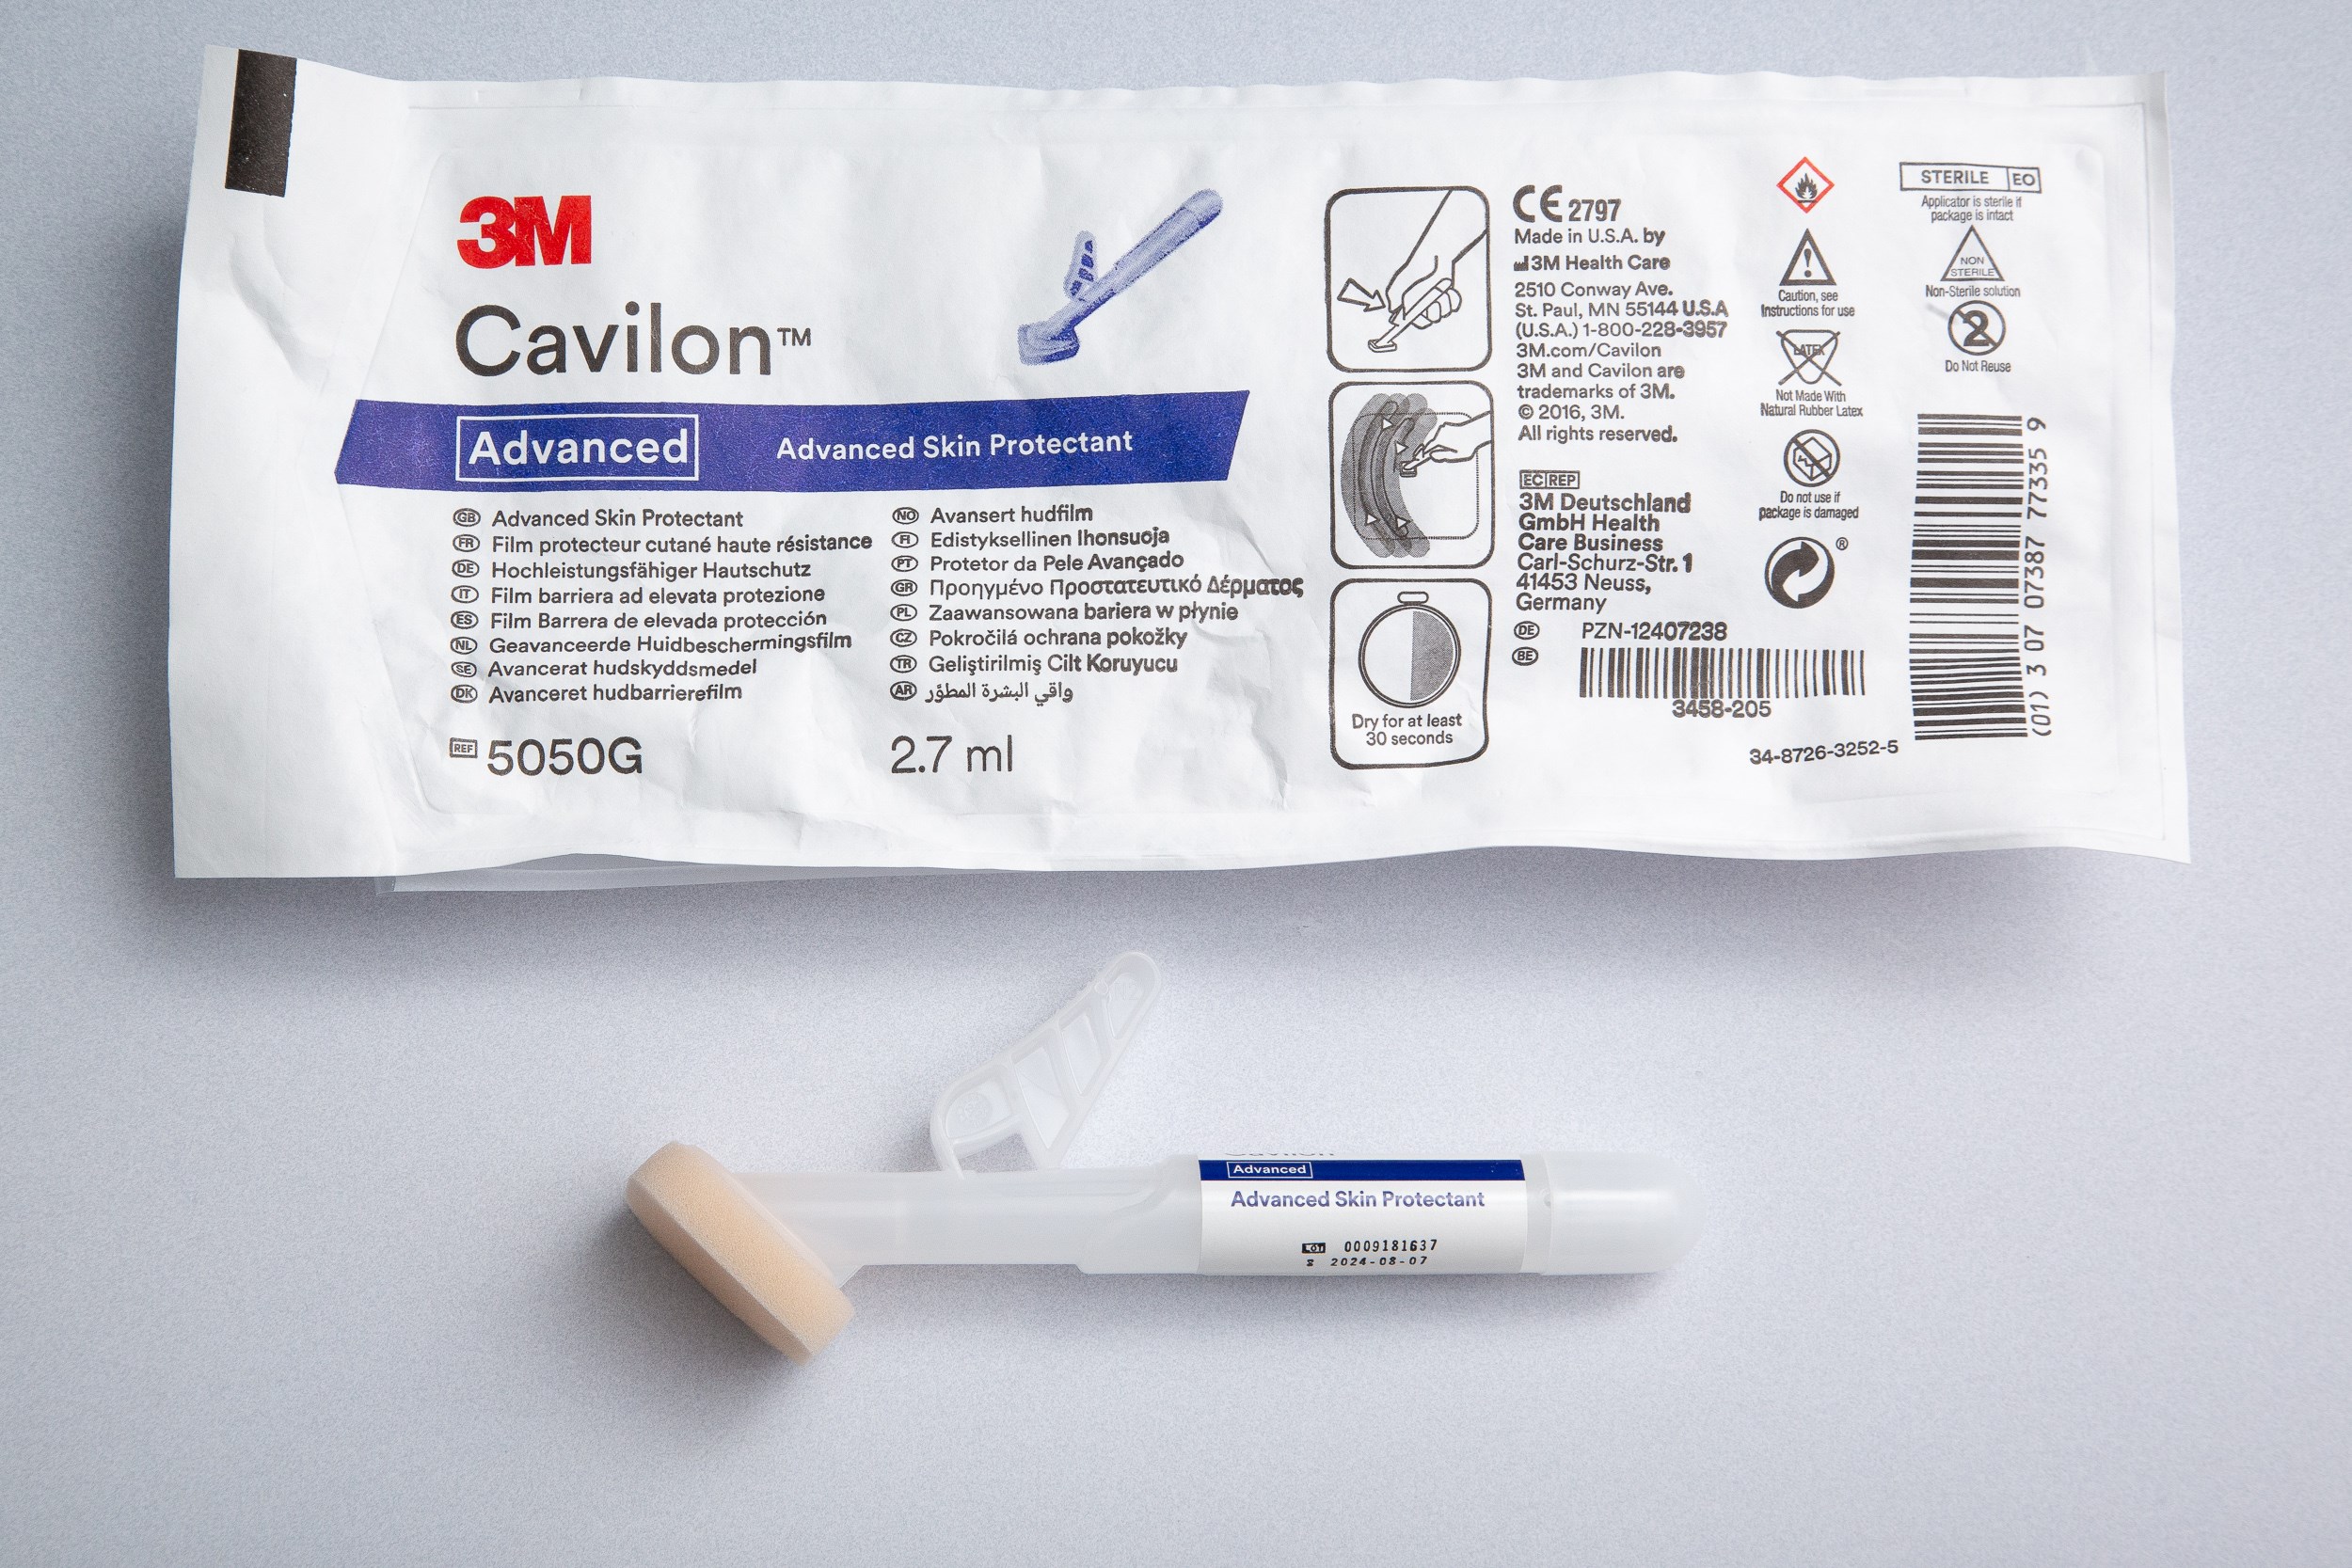 Cavilon Advanced Skin Protectant